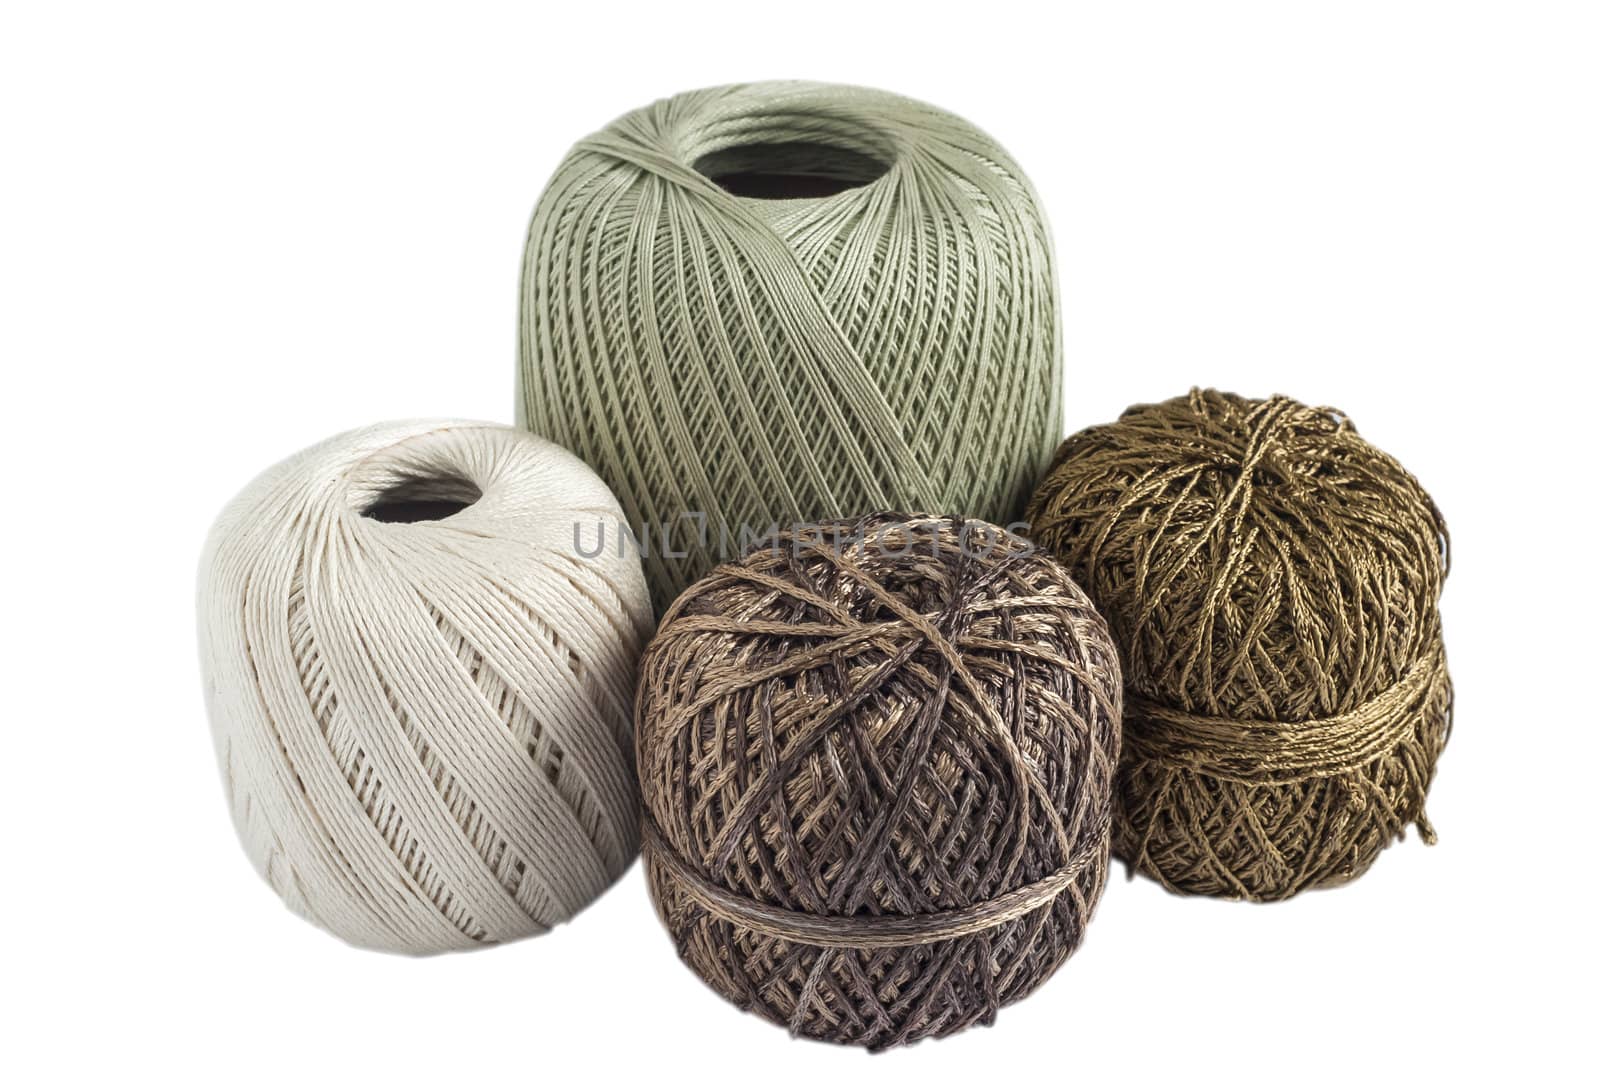 Skeins of yarn for knitting by varbenov